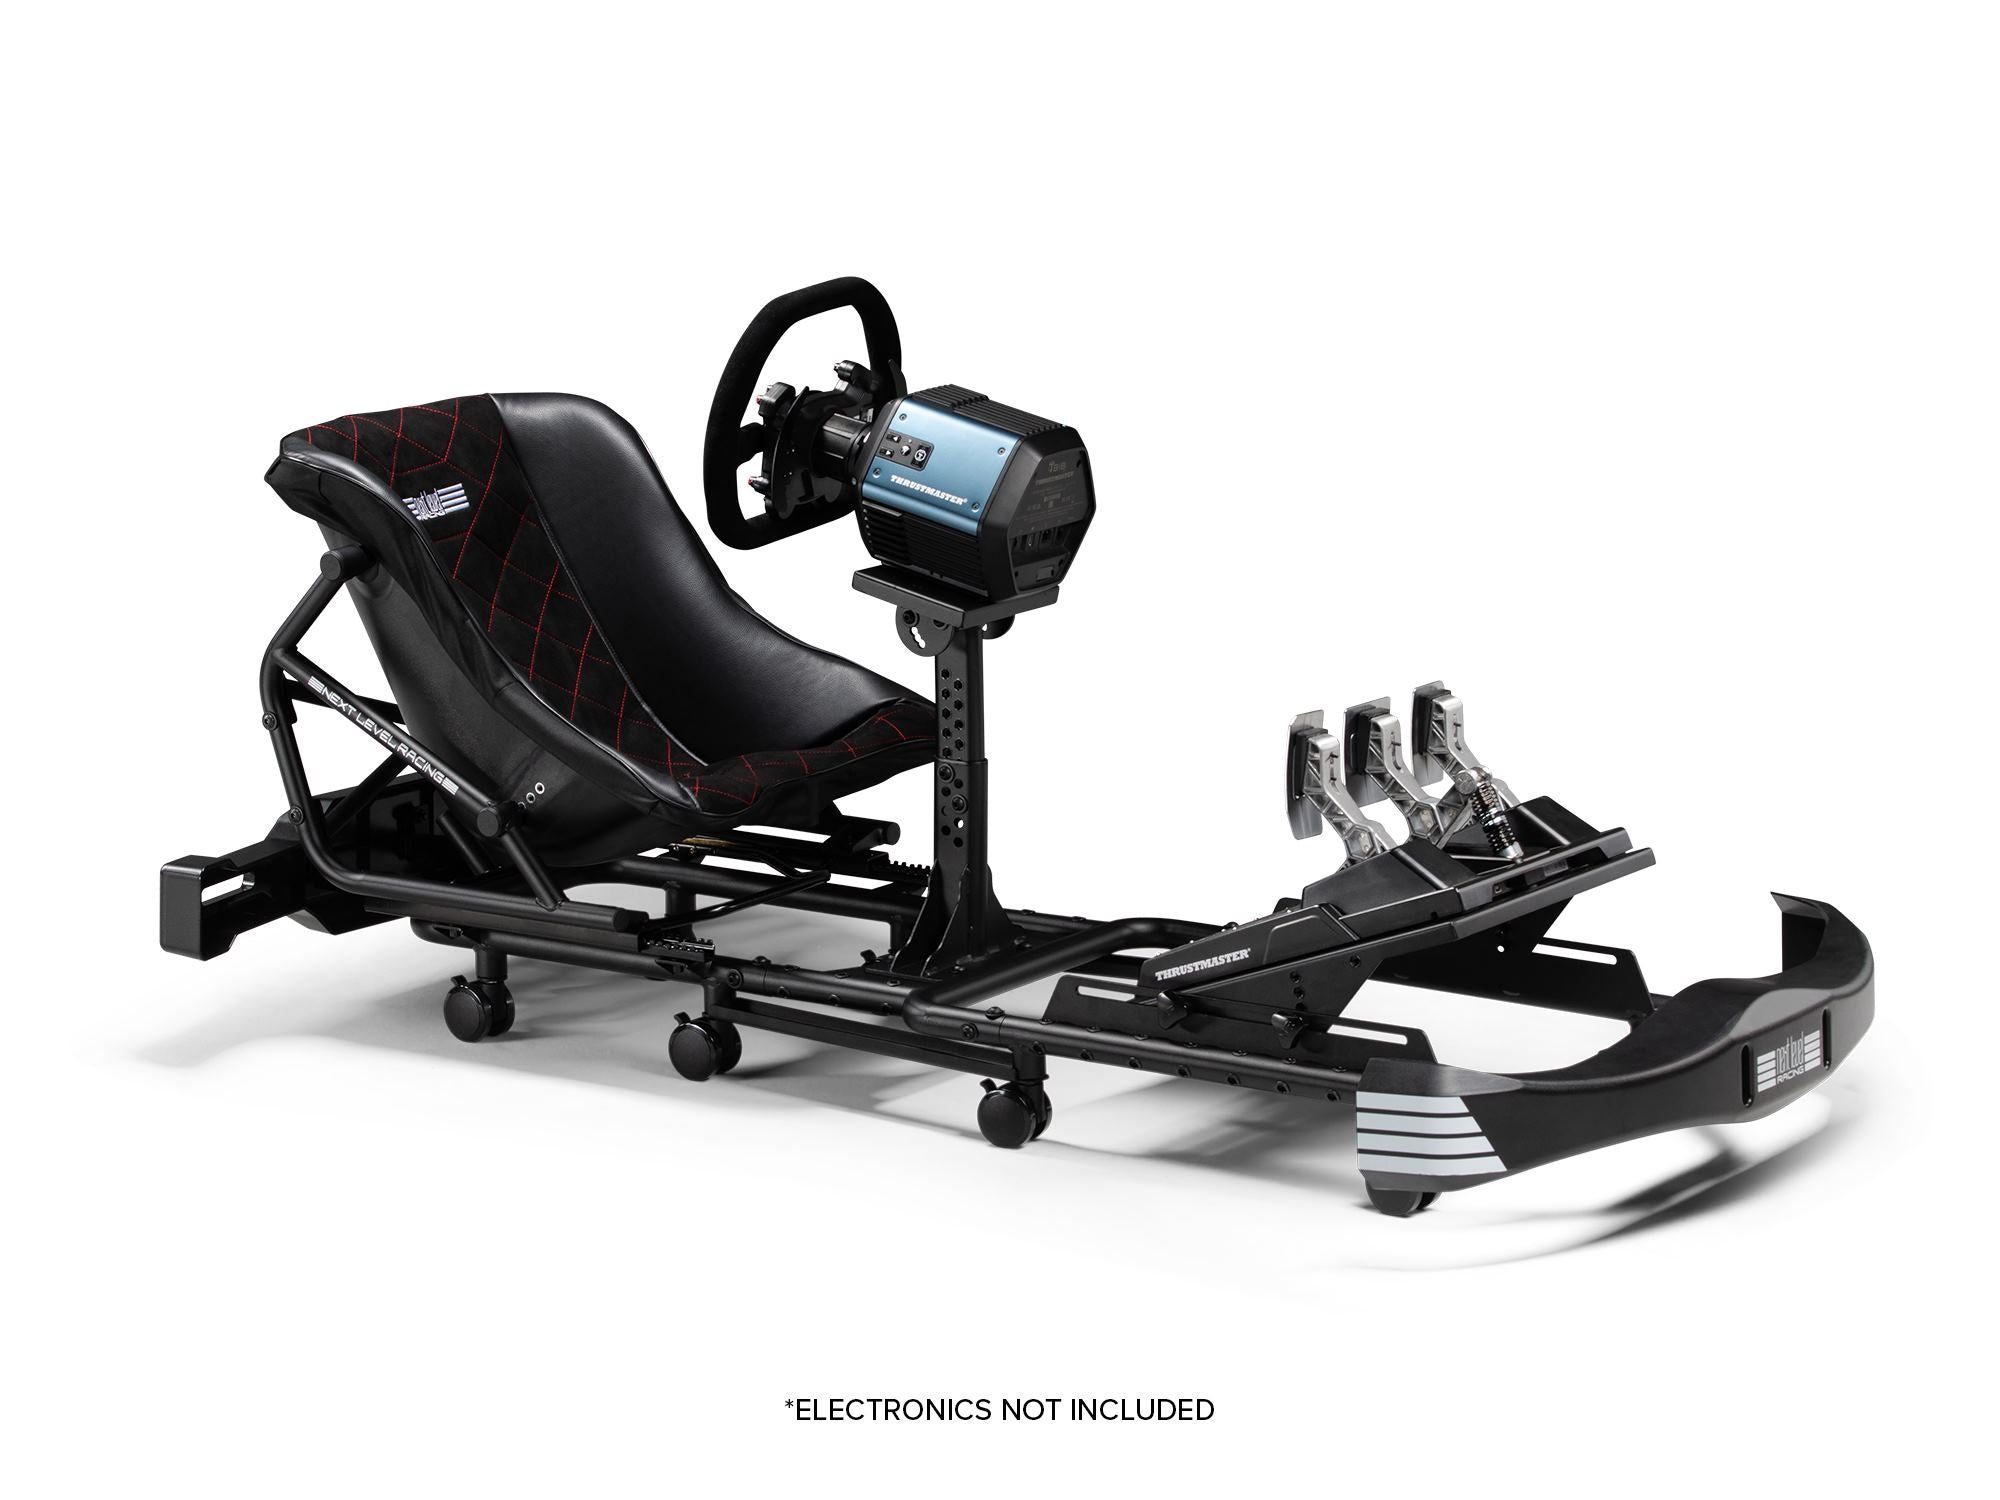 Next Level Racing Go Kart Plus Simulator Cockpit